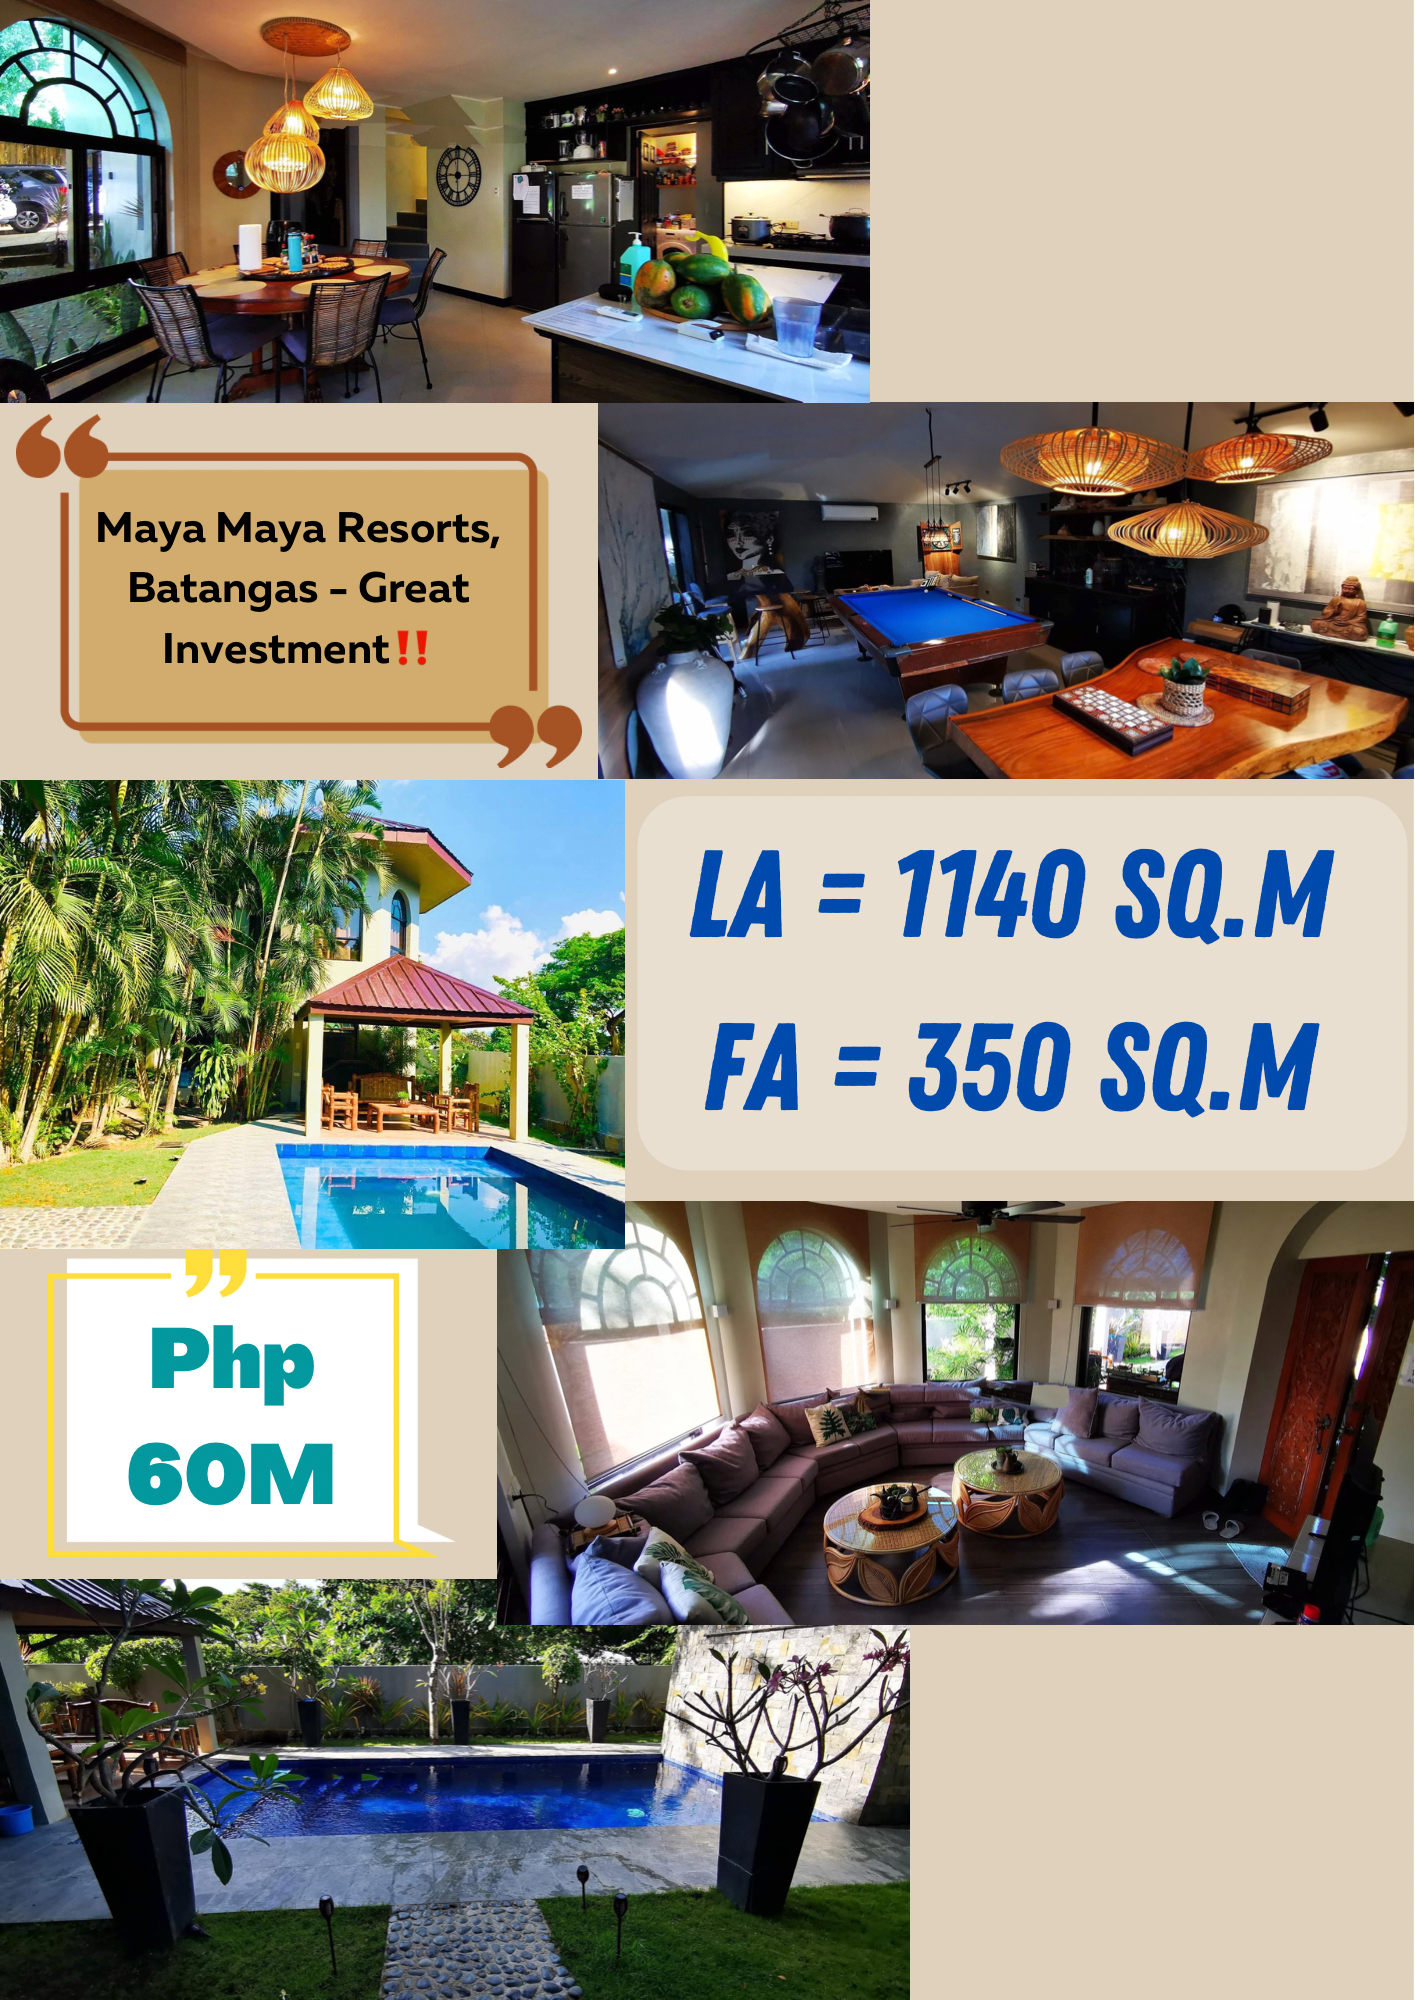 Maya Maya Resorts, Nasugbu, Batangas for Sale – Great Investment‼️